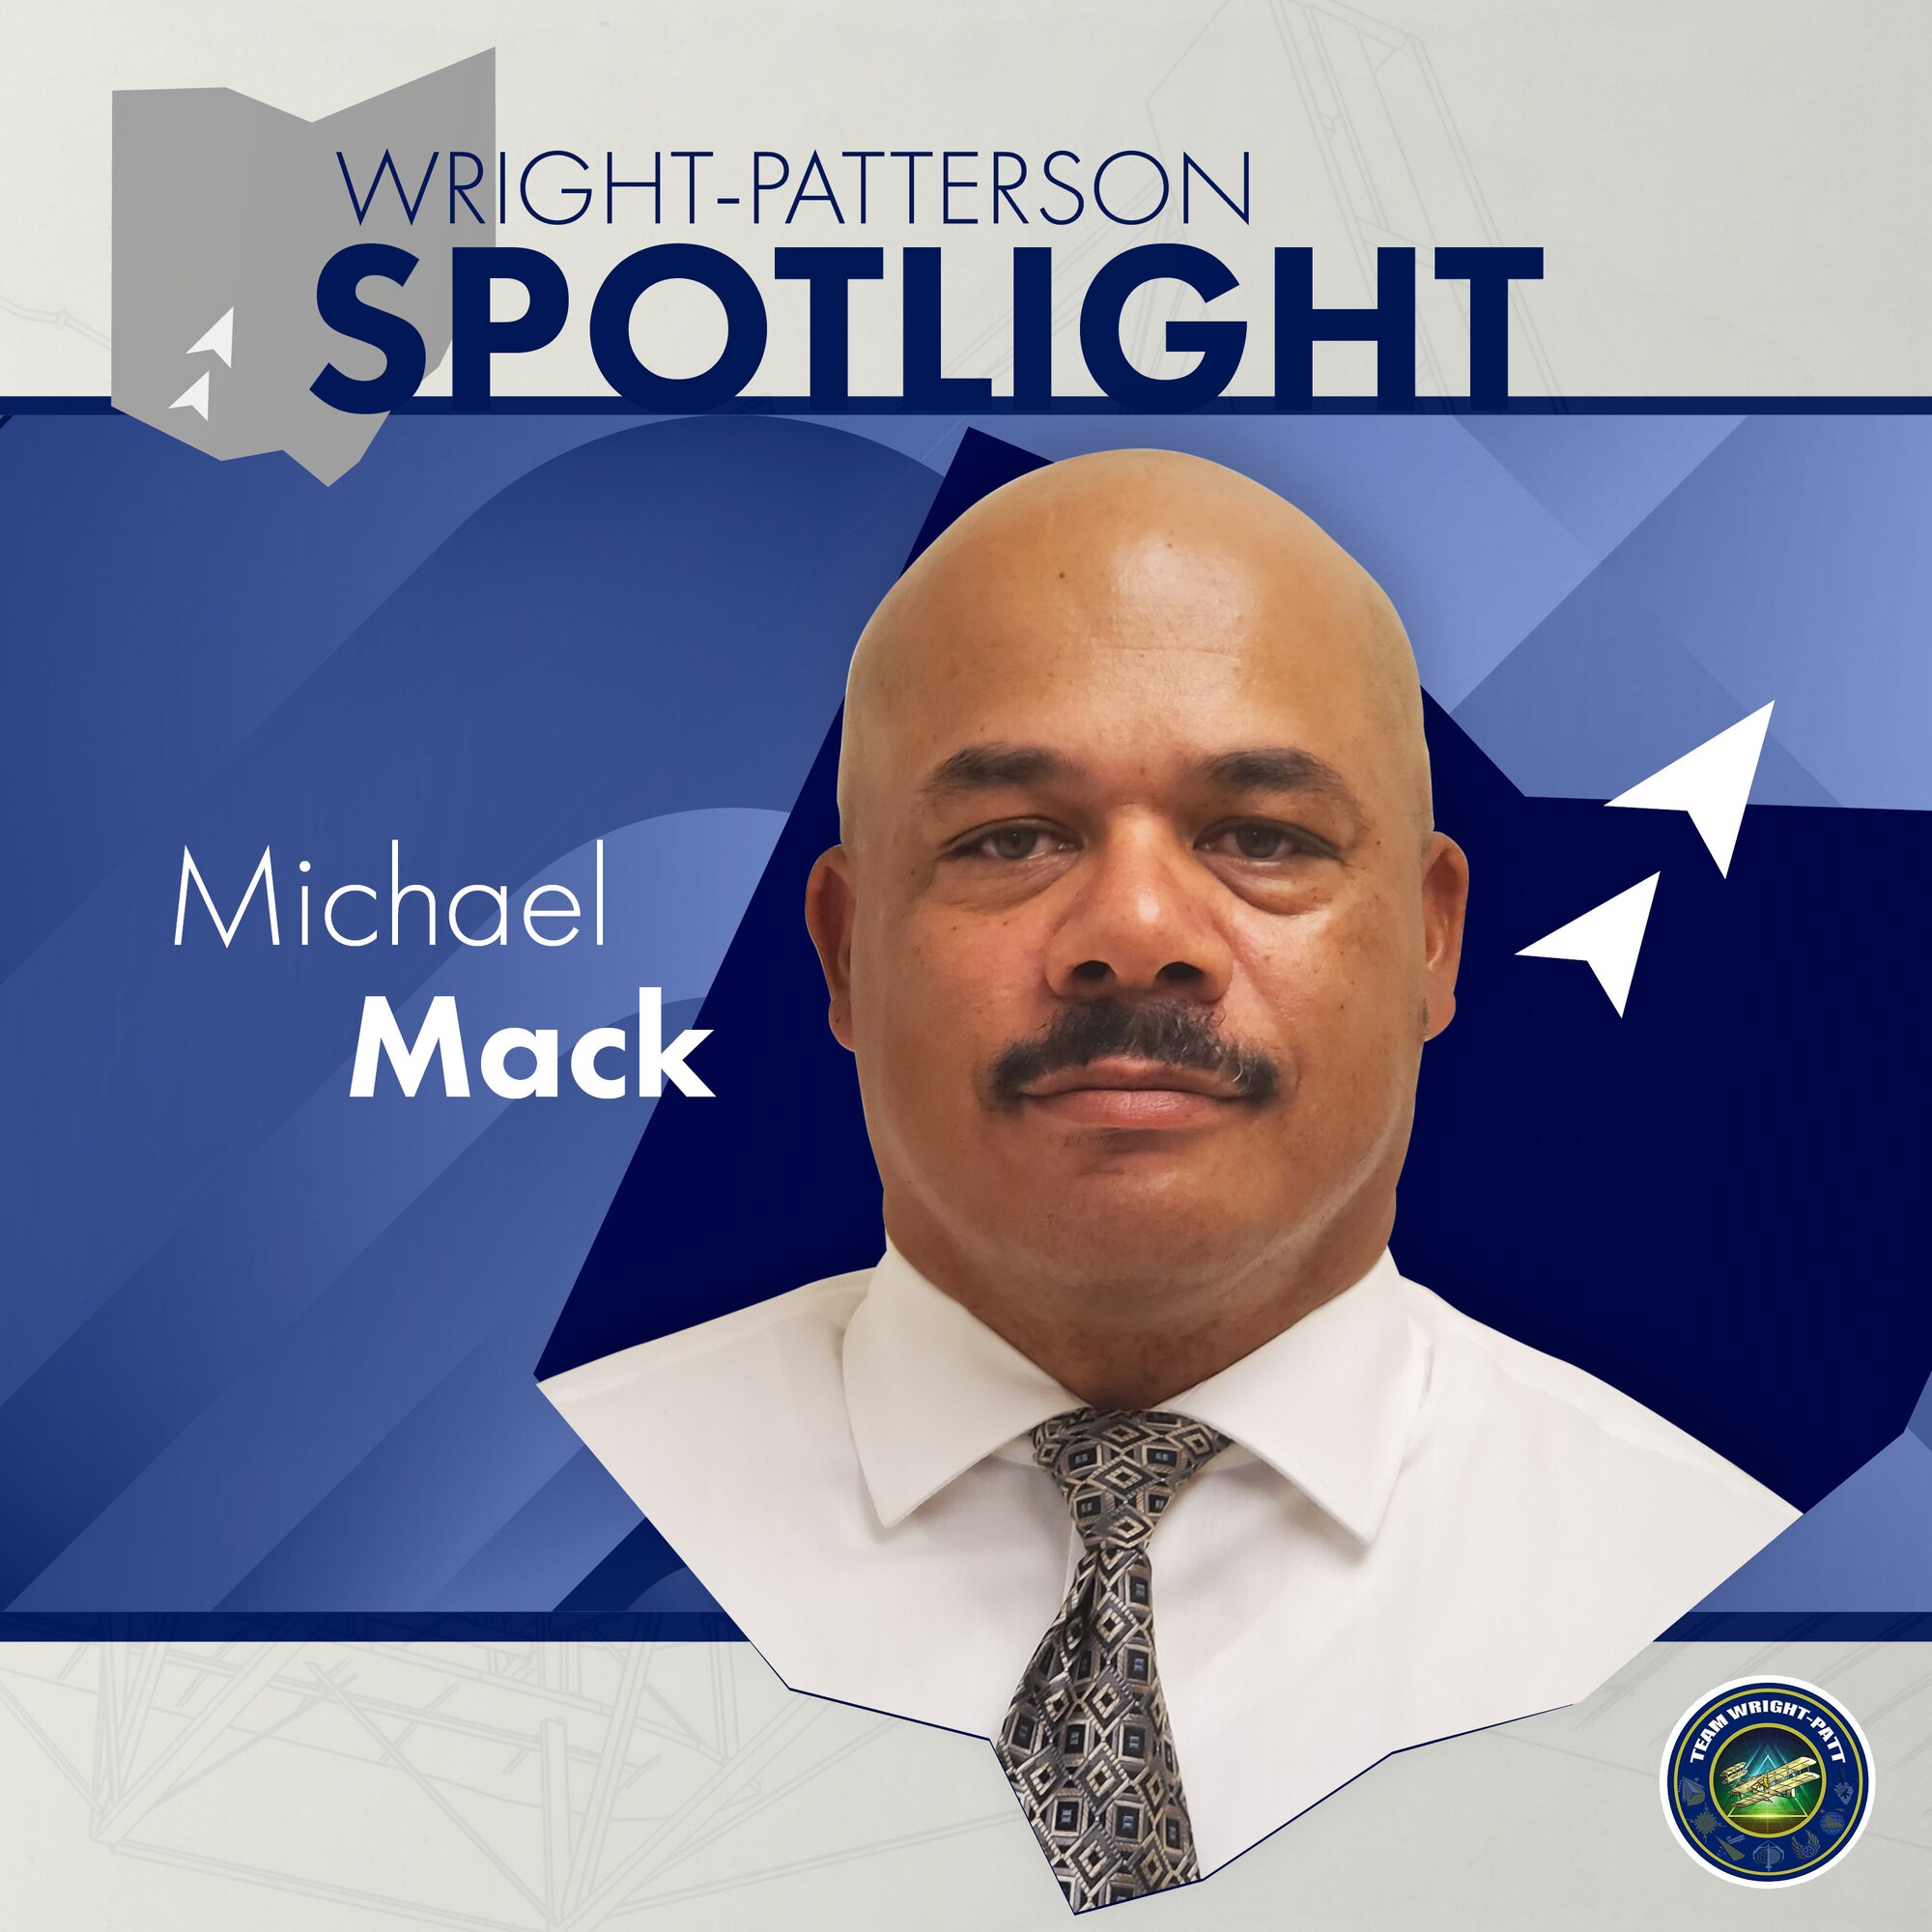 Wright-Patterson Spotlight: Michael Mack